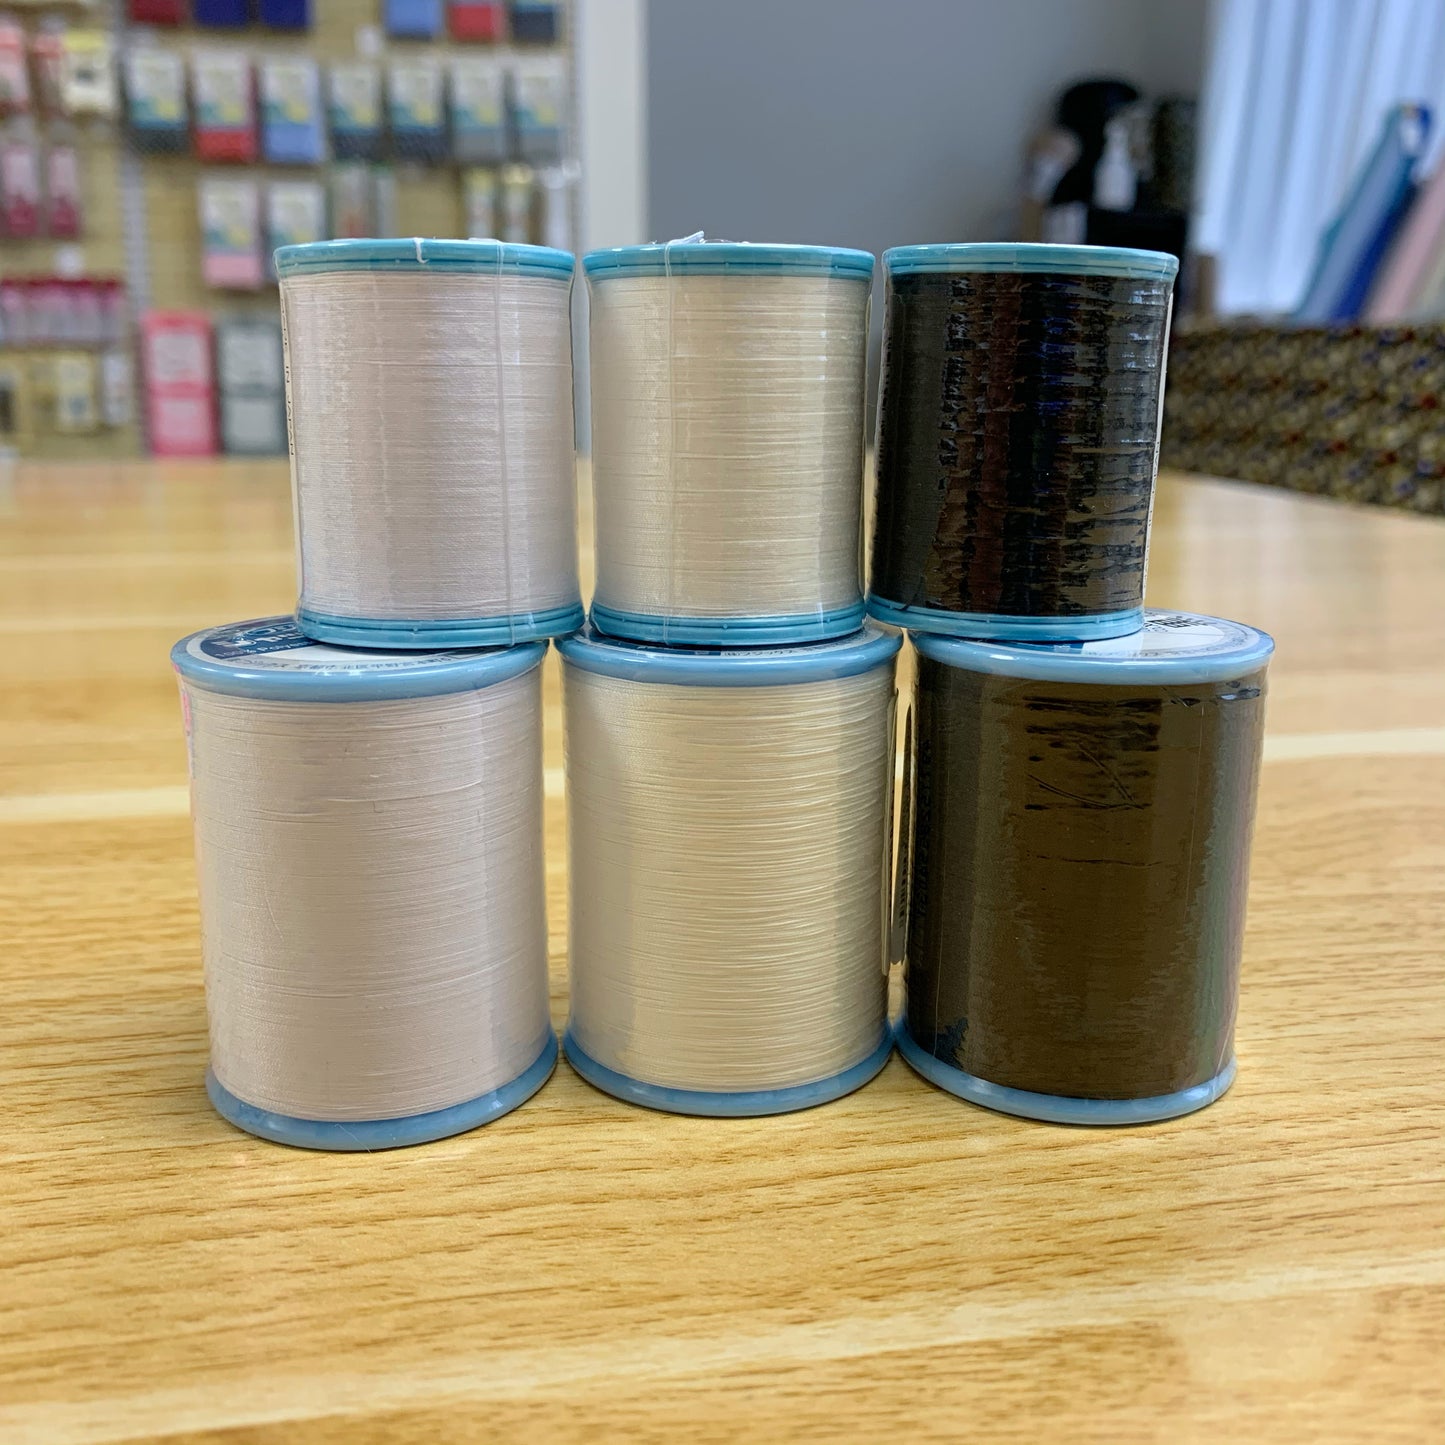 Fujix | #60 sewing thread 縫紉線(一般布使用) 700m - 18 colors